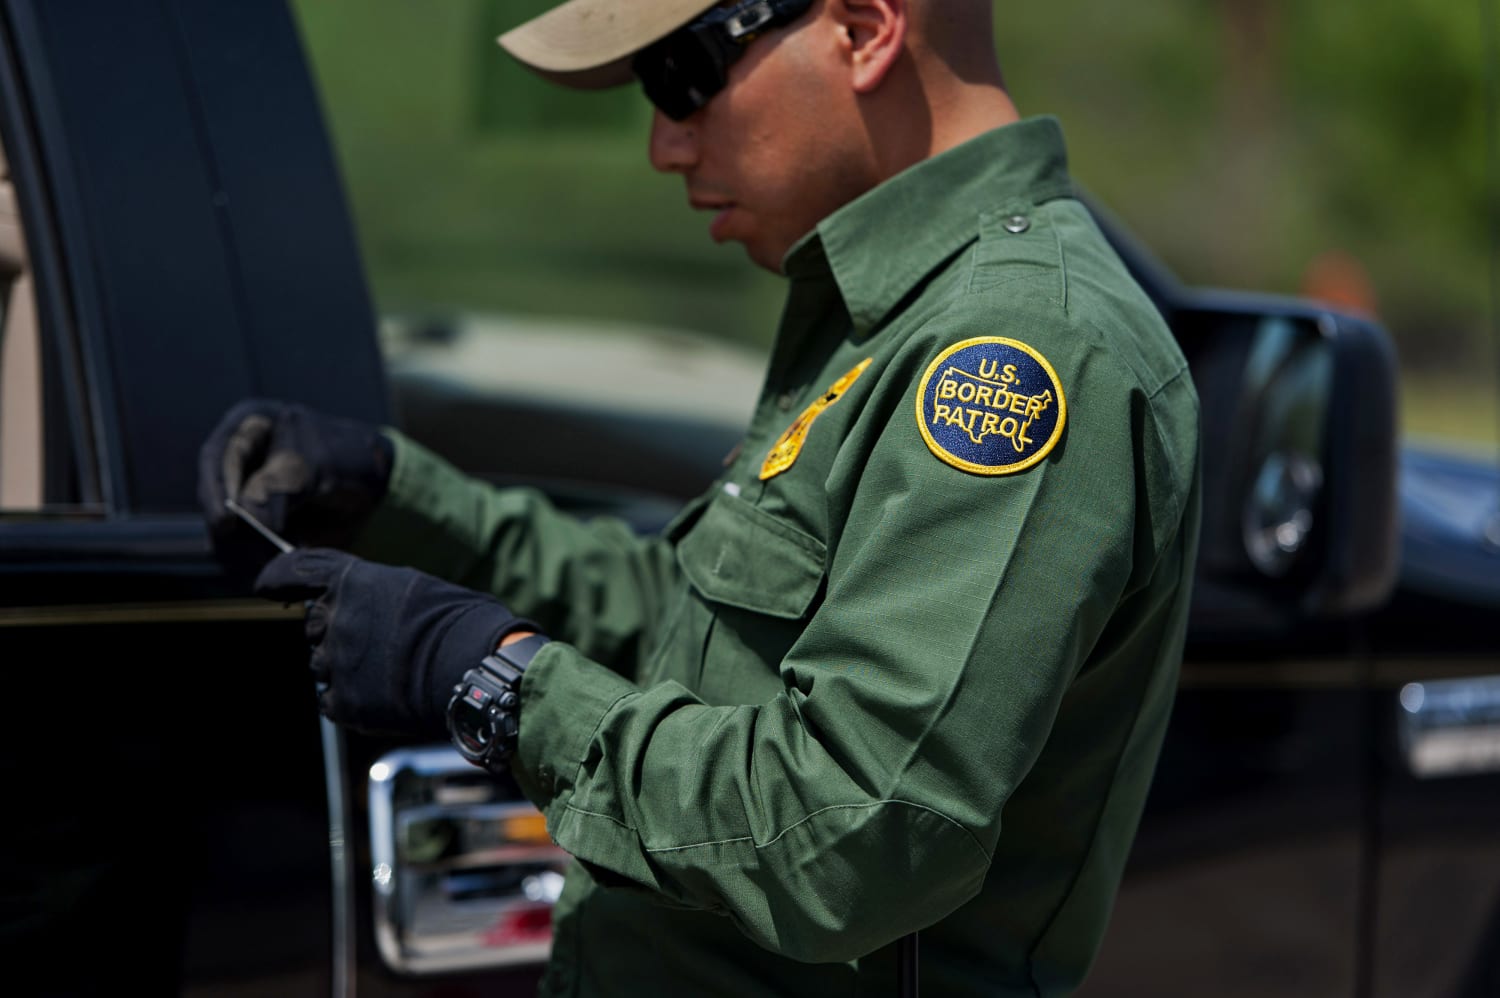 US Border Patrol Texas Police Shirt